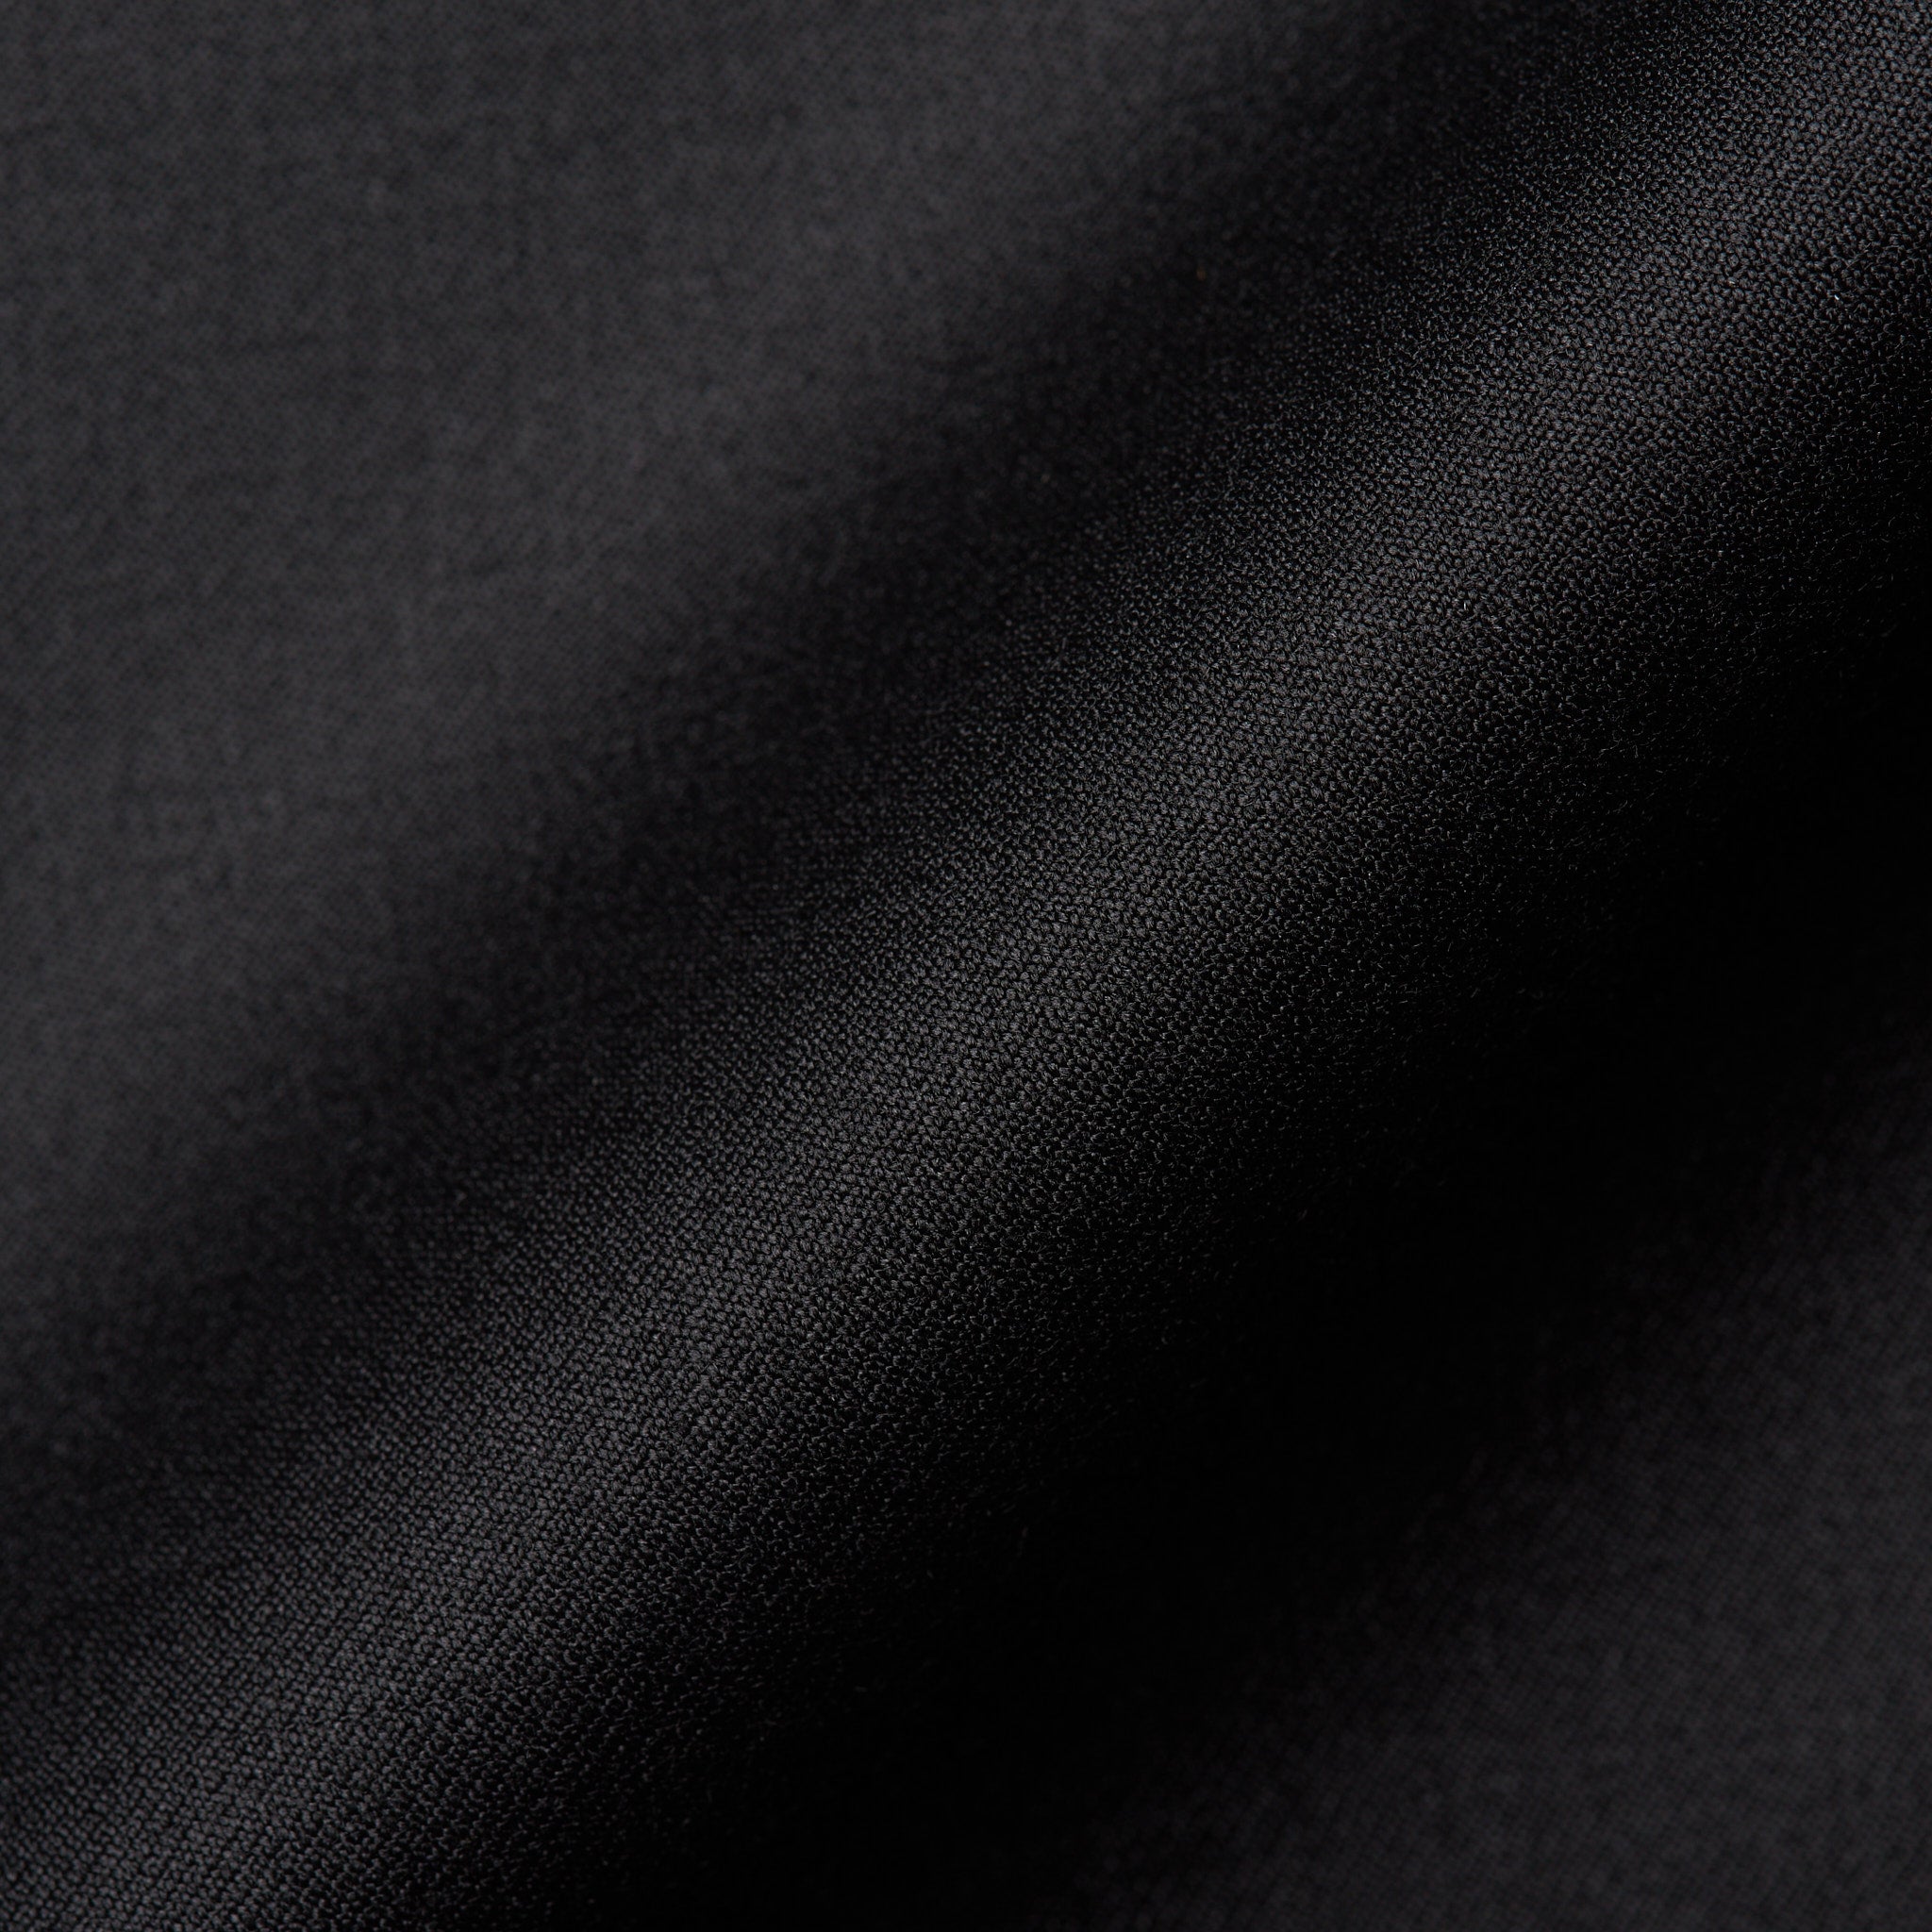 D'AVENZA Handmade Black Wool Super 130's 4 Button Formal Suit EU 50 NEW US 40 D'AVENZA